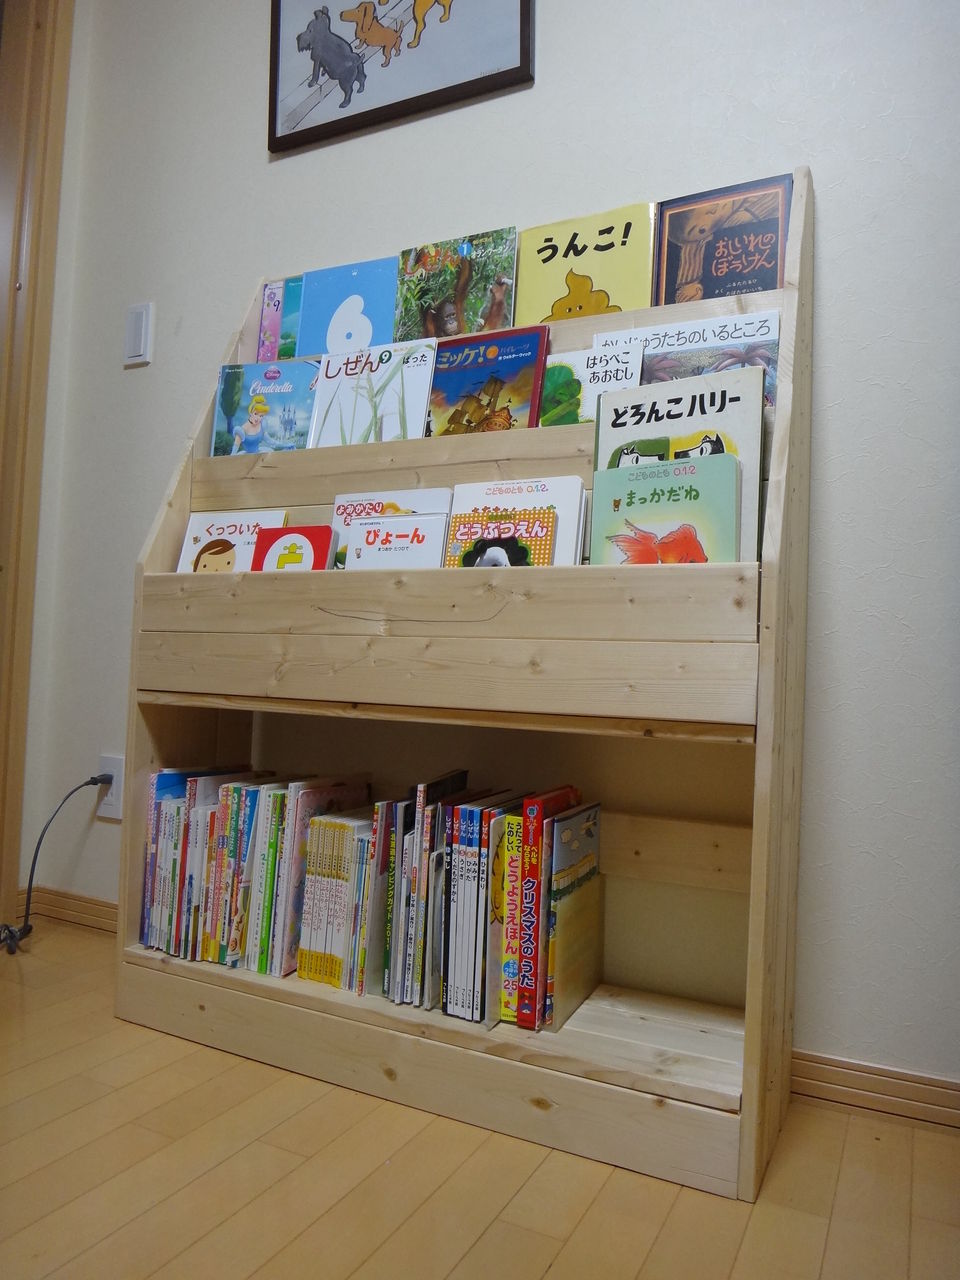 ｄｉｙ ｓｐｆ１ ４材で作る 子供用本棚 図書館風 道産子サラリーマンの北海道生活を楽しむ方法